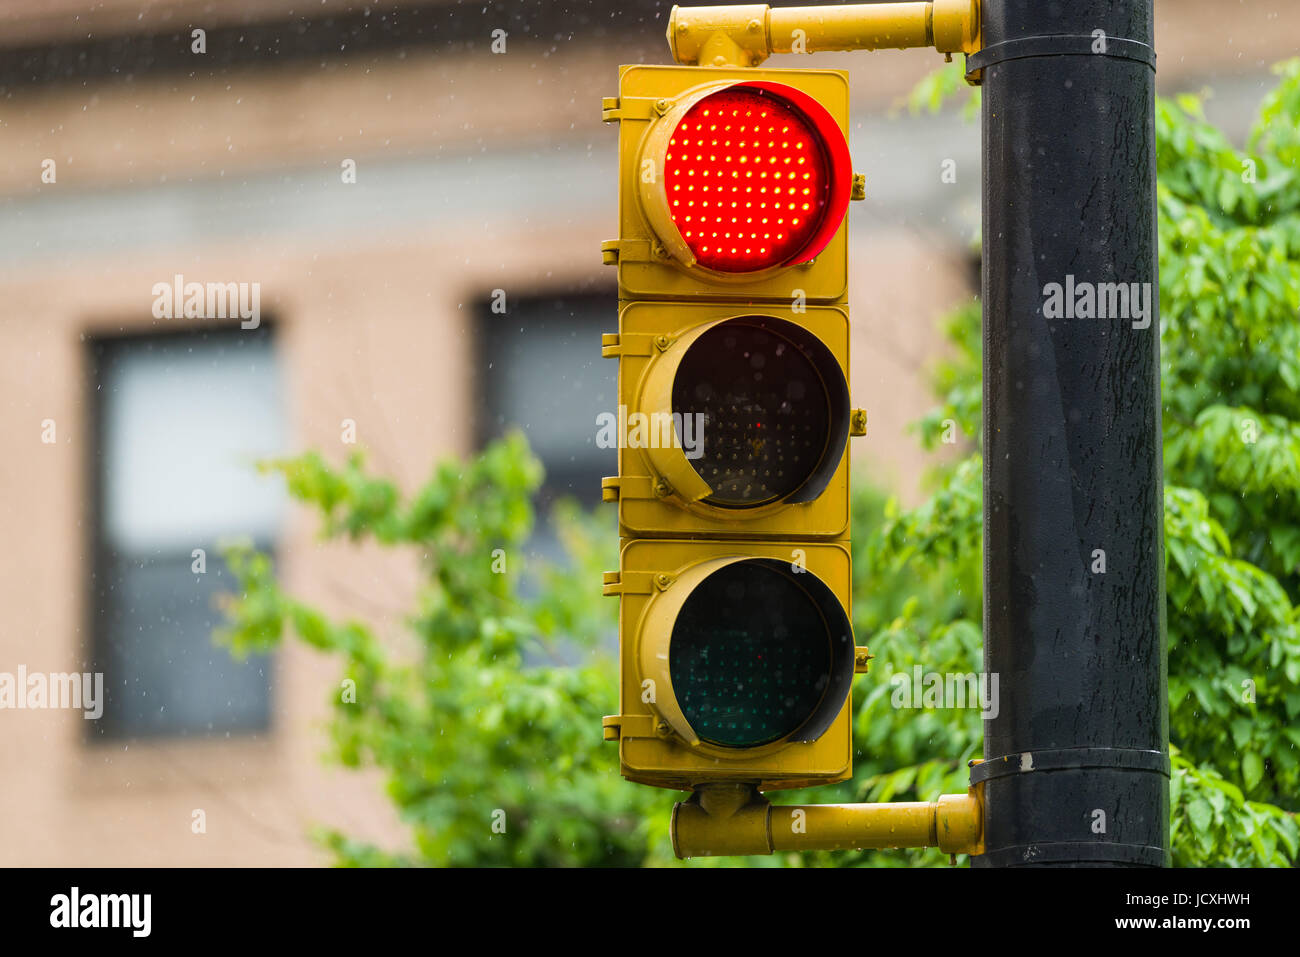 Red Traffic Light Signal, New York, United States of America Stock Photo -  Alamy